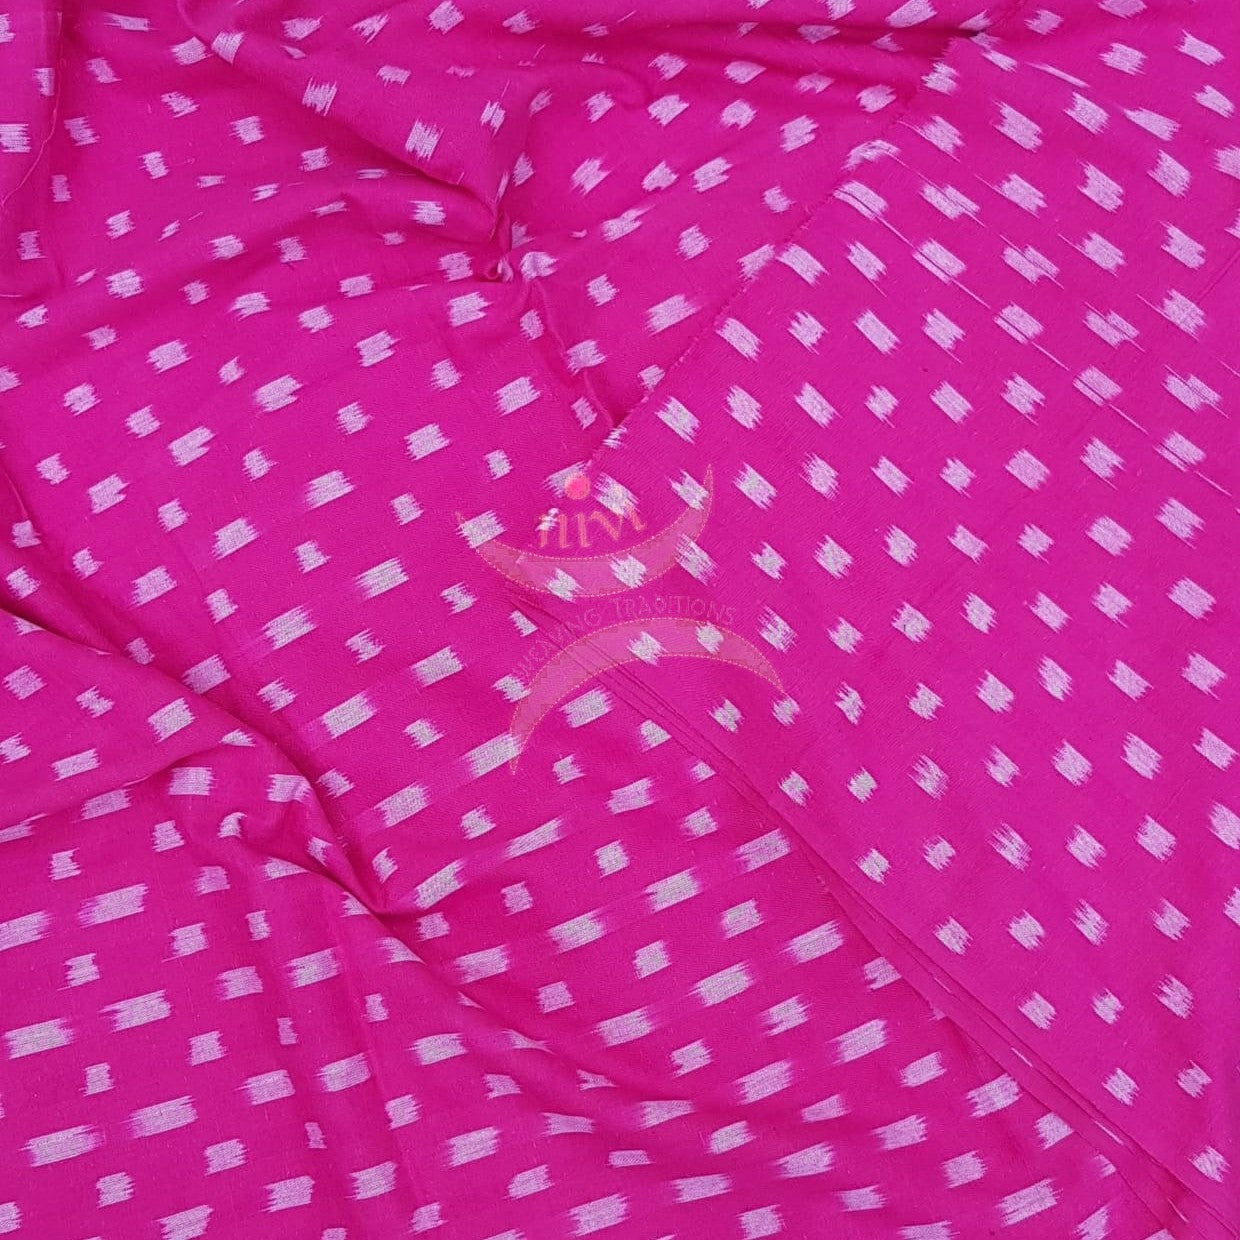 Handloom pink pochampalli ikat cotton fabric